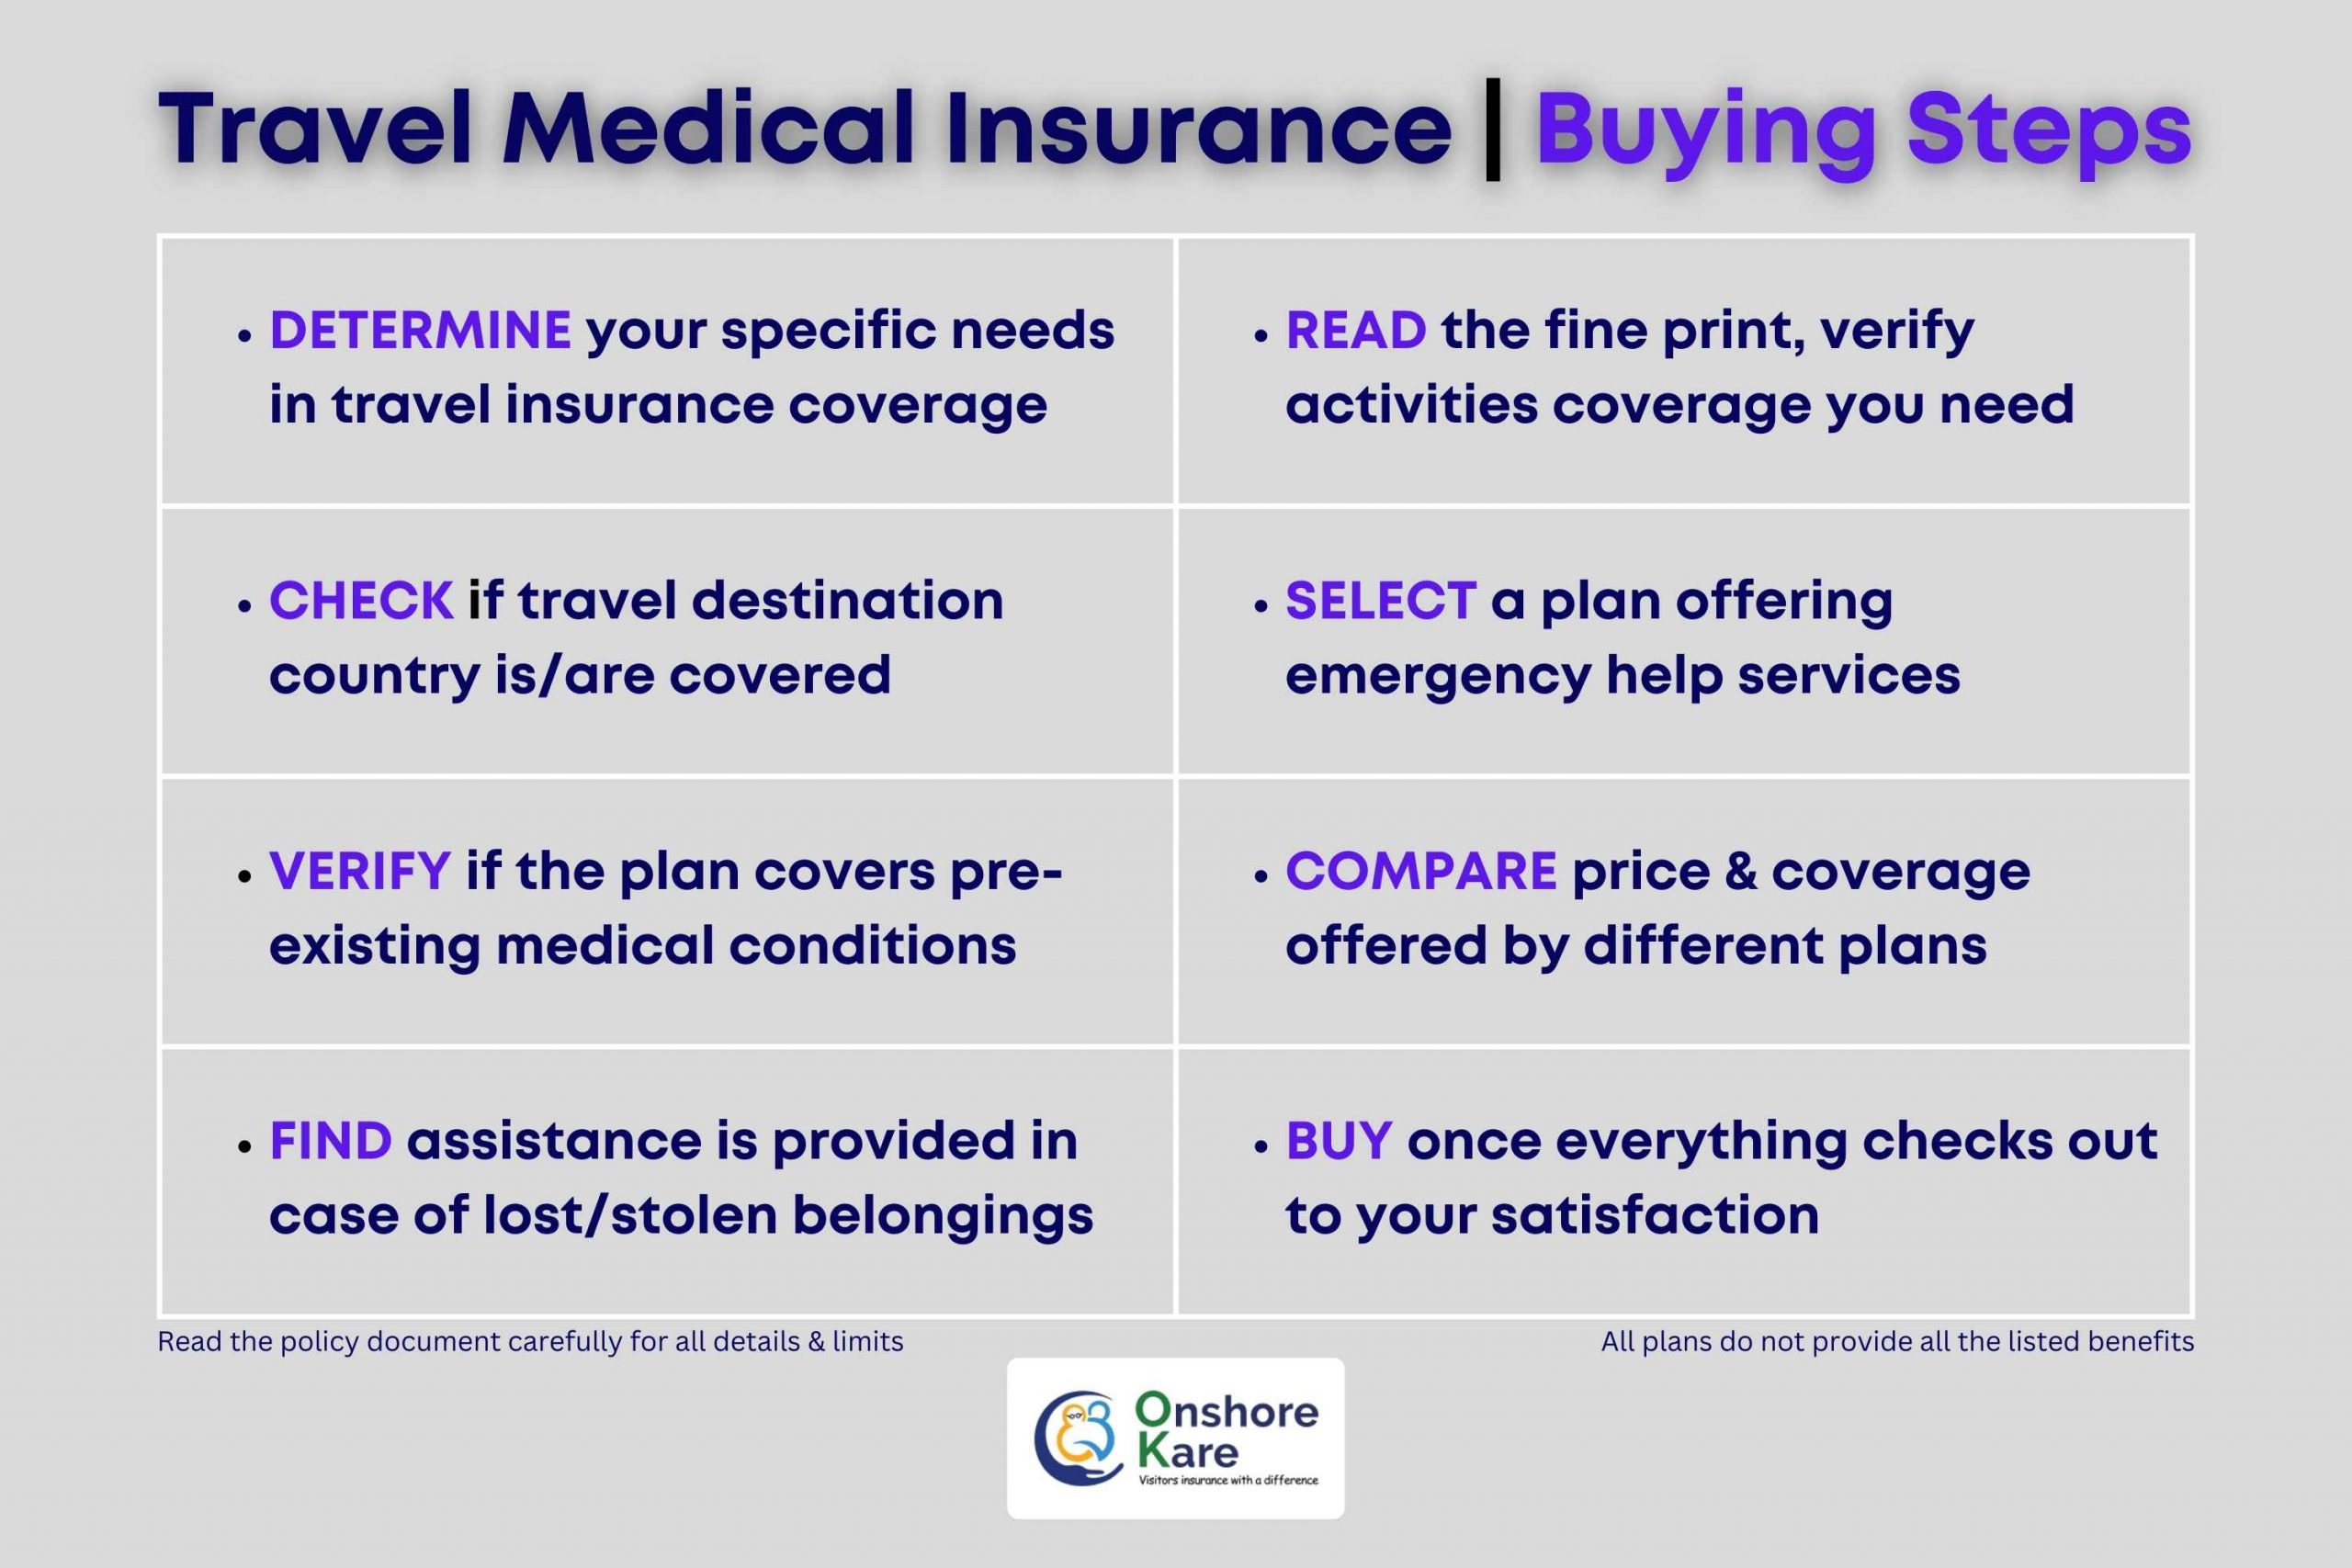 Travel Medical Insurance Buying Steps